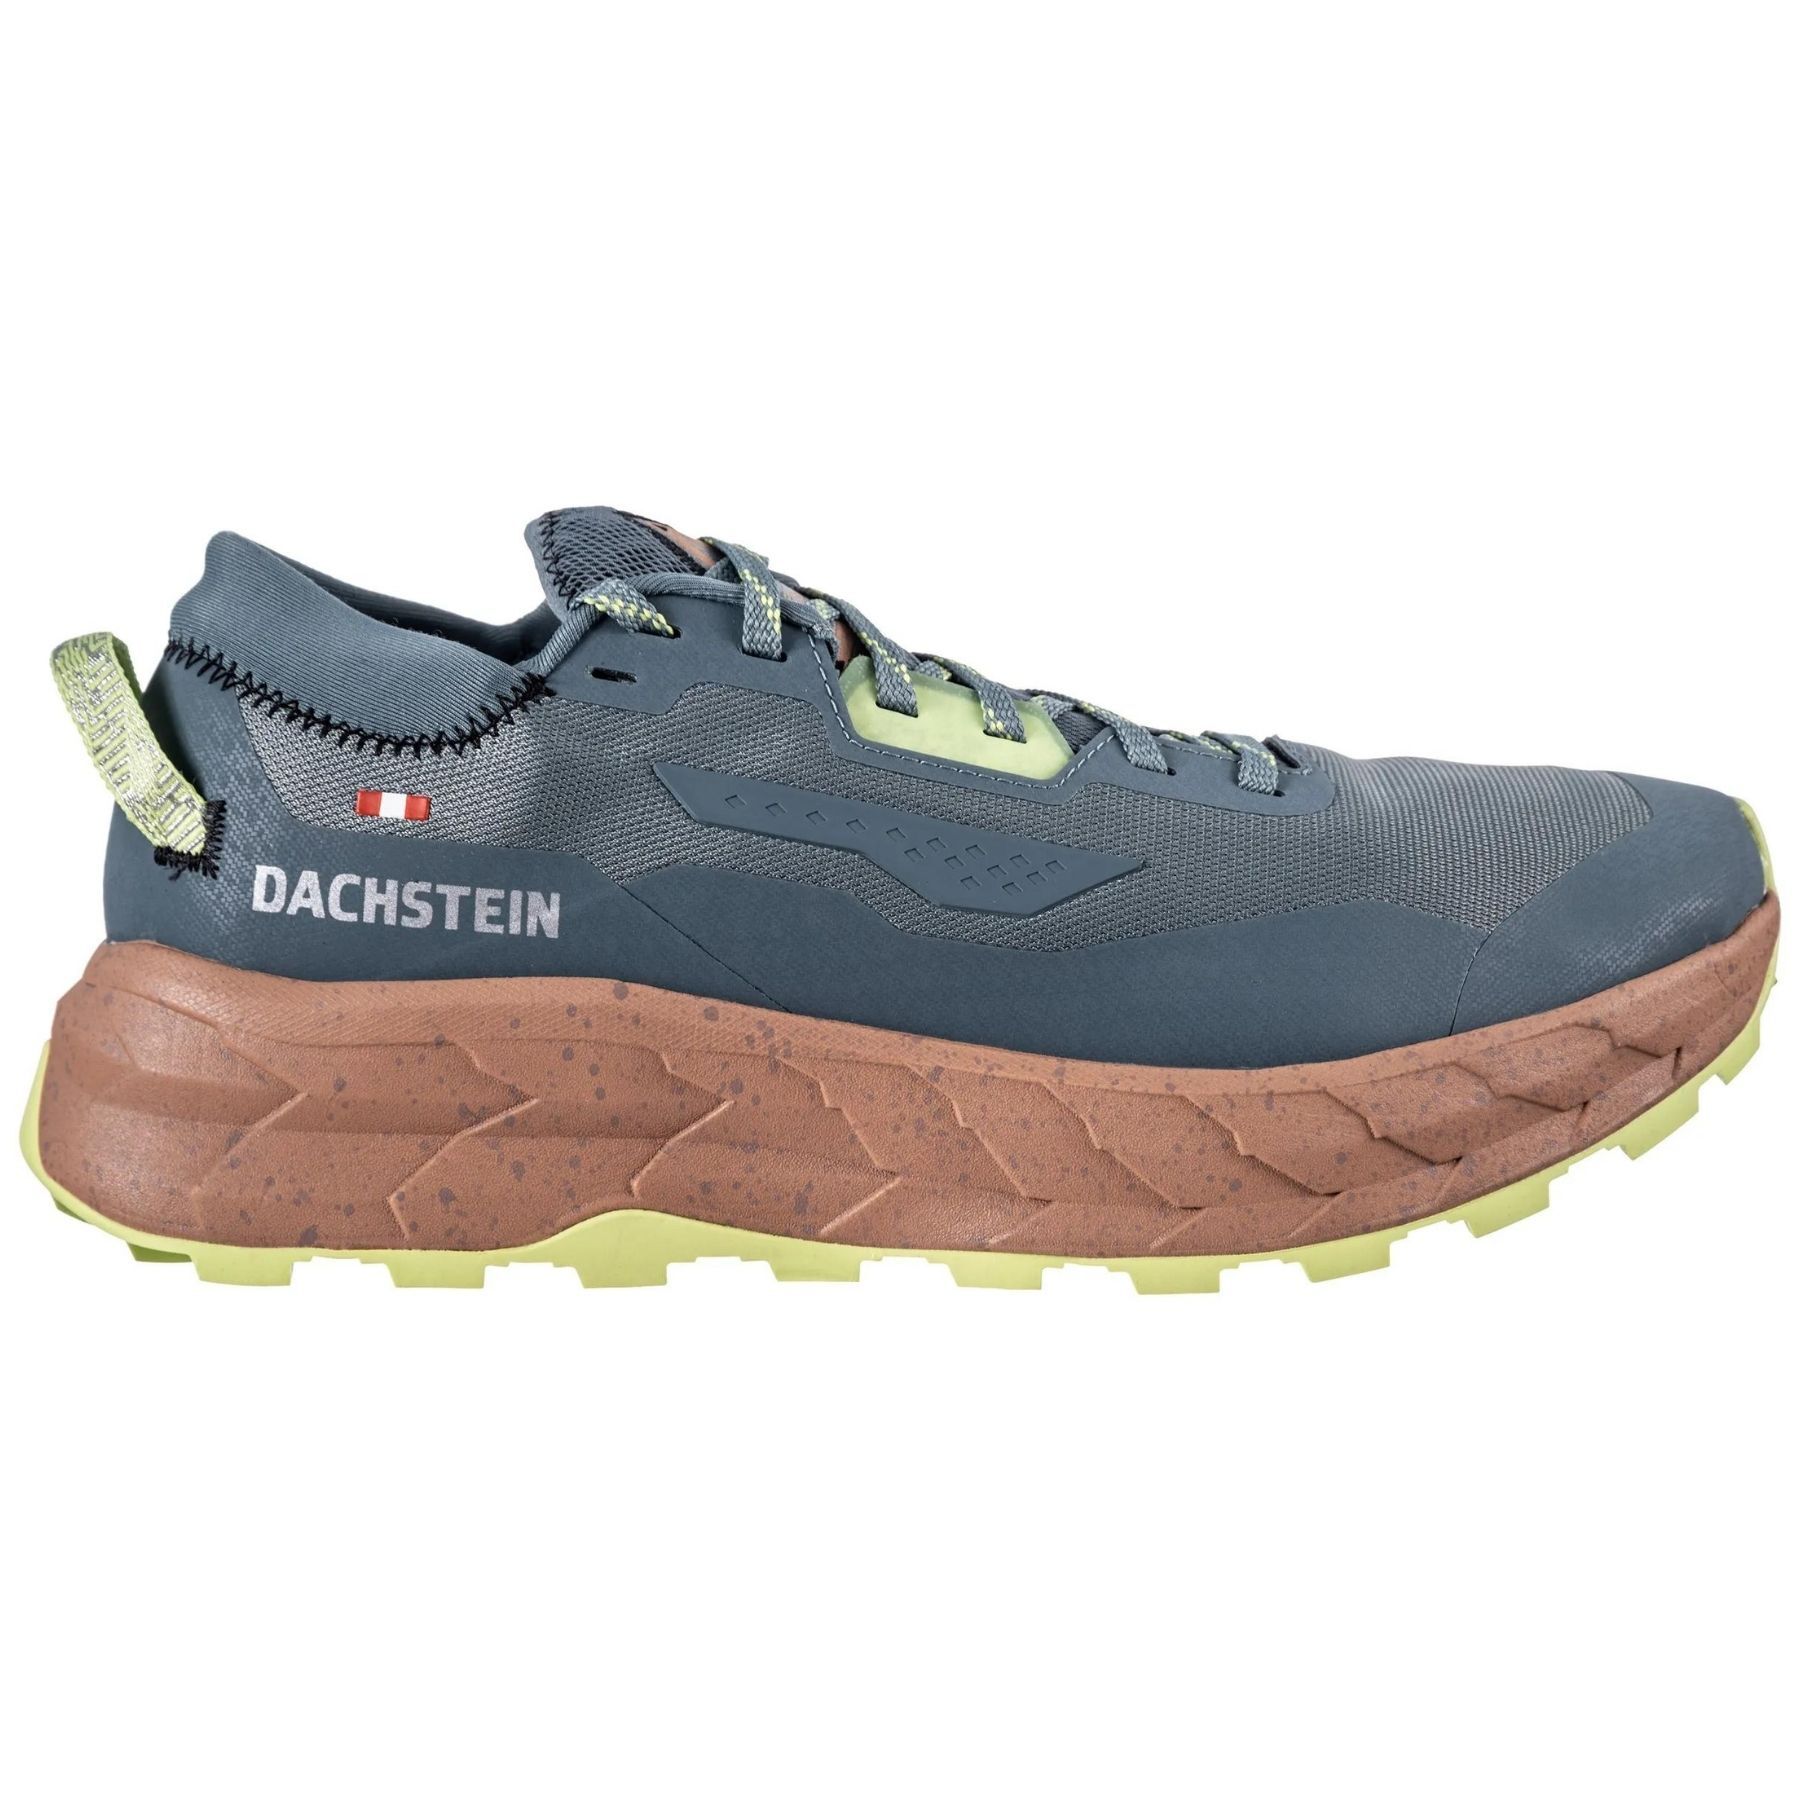 Dachstein X-Trail 01 - Trail running shoes - Men's